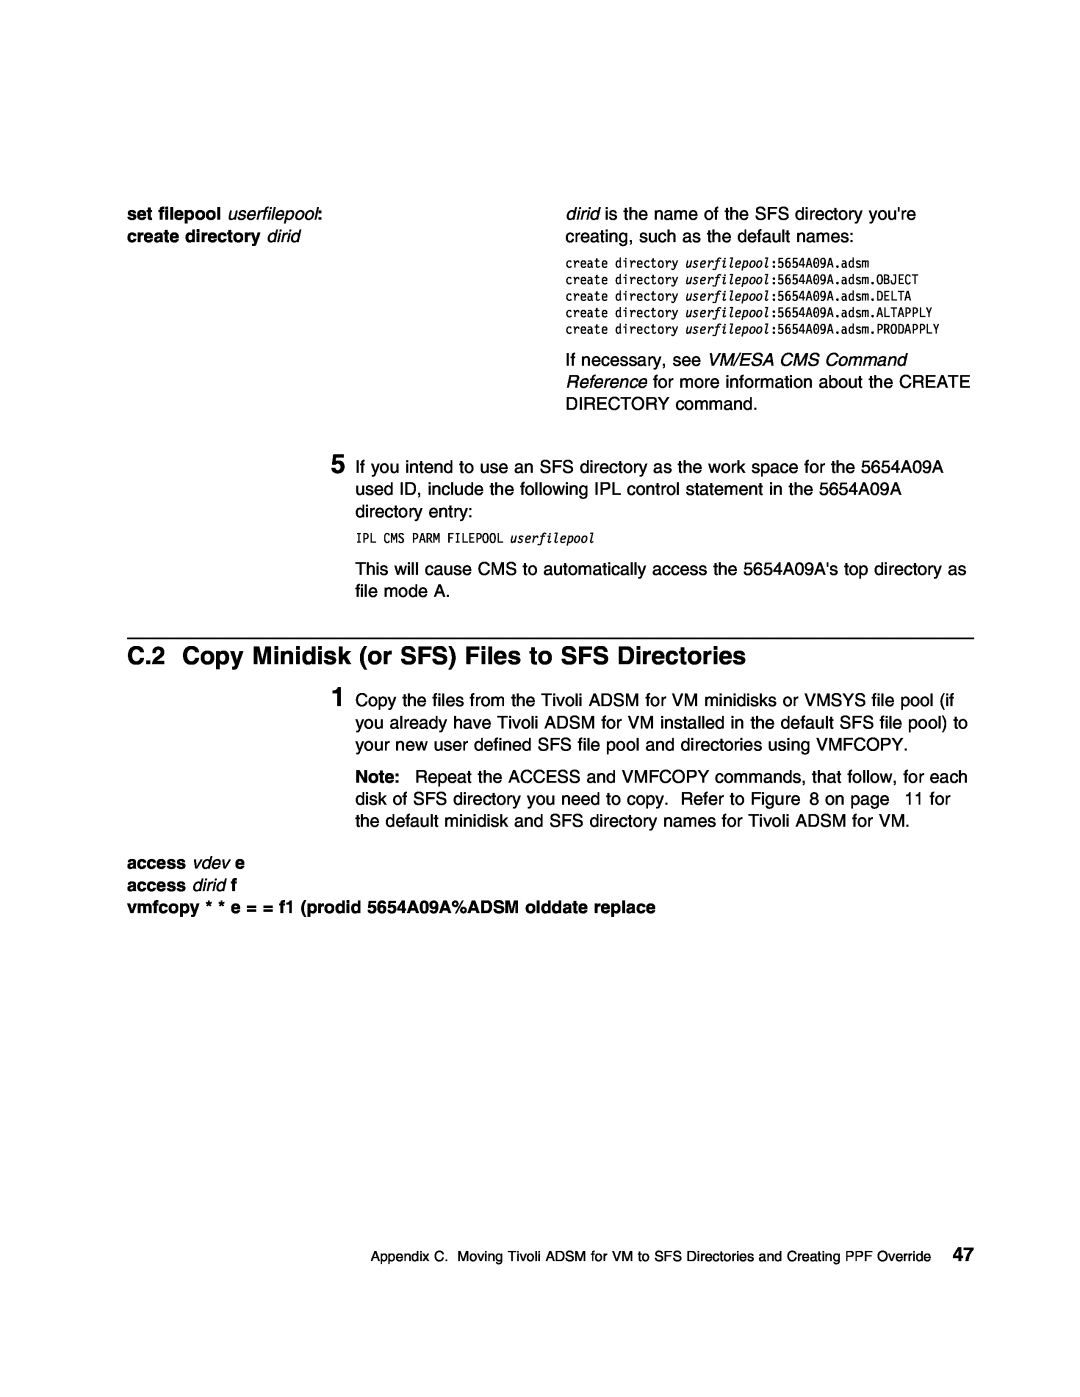 IBM 5697-VM3 manual C.2 Copy Minidisk or SFS Files to SFS Directories, set filepool userfilepool, create directory dirid 